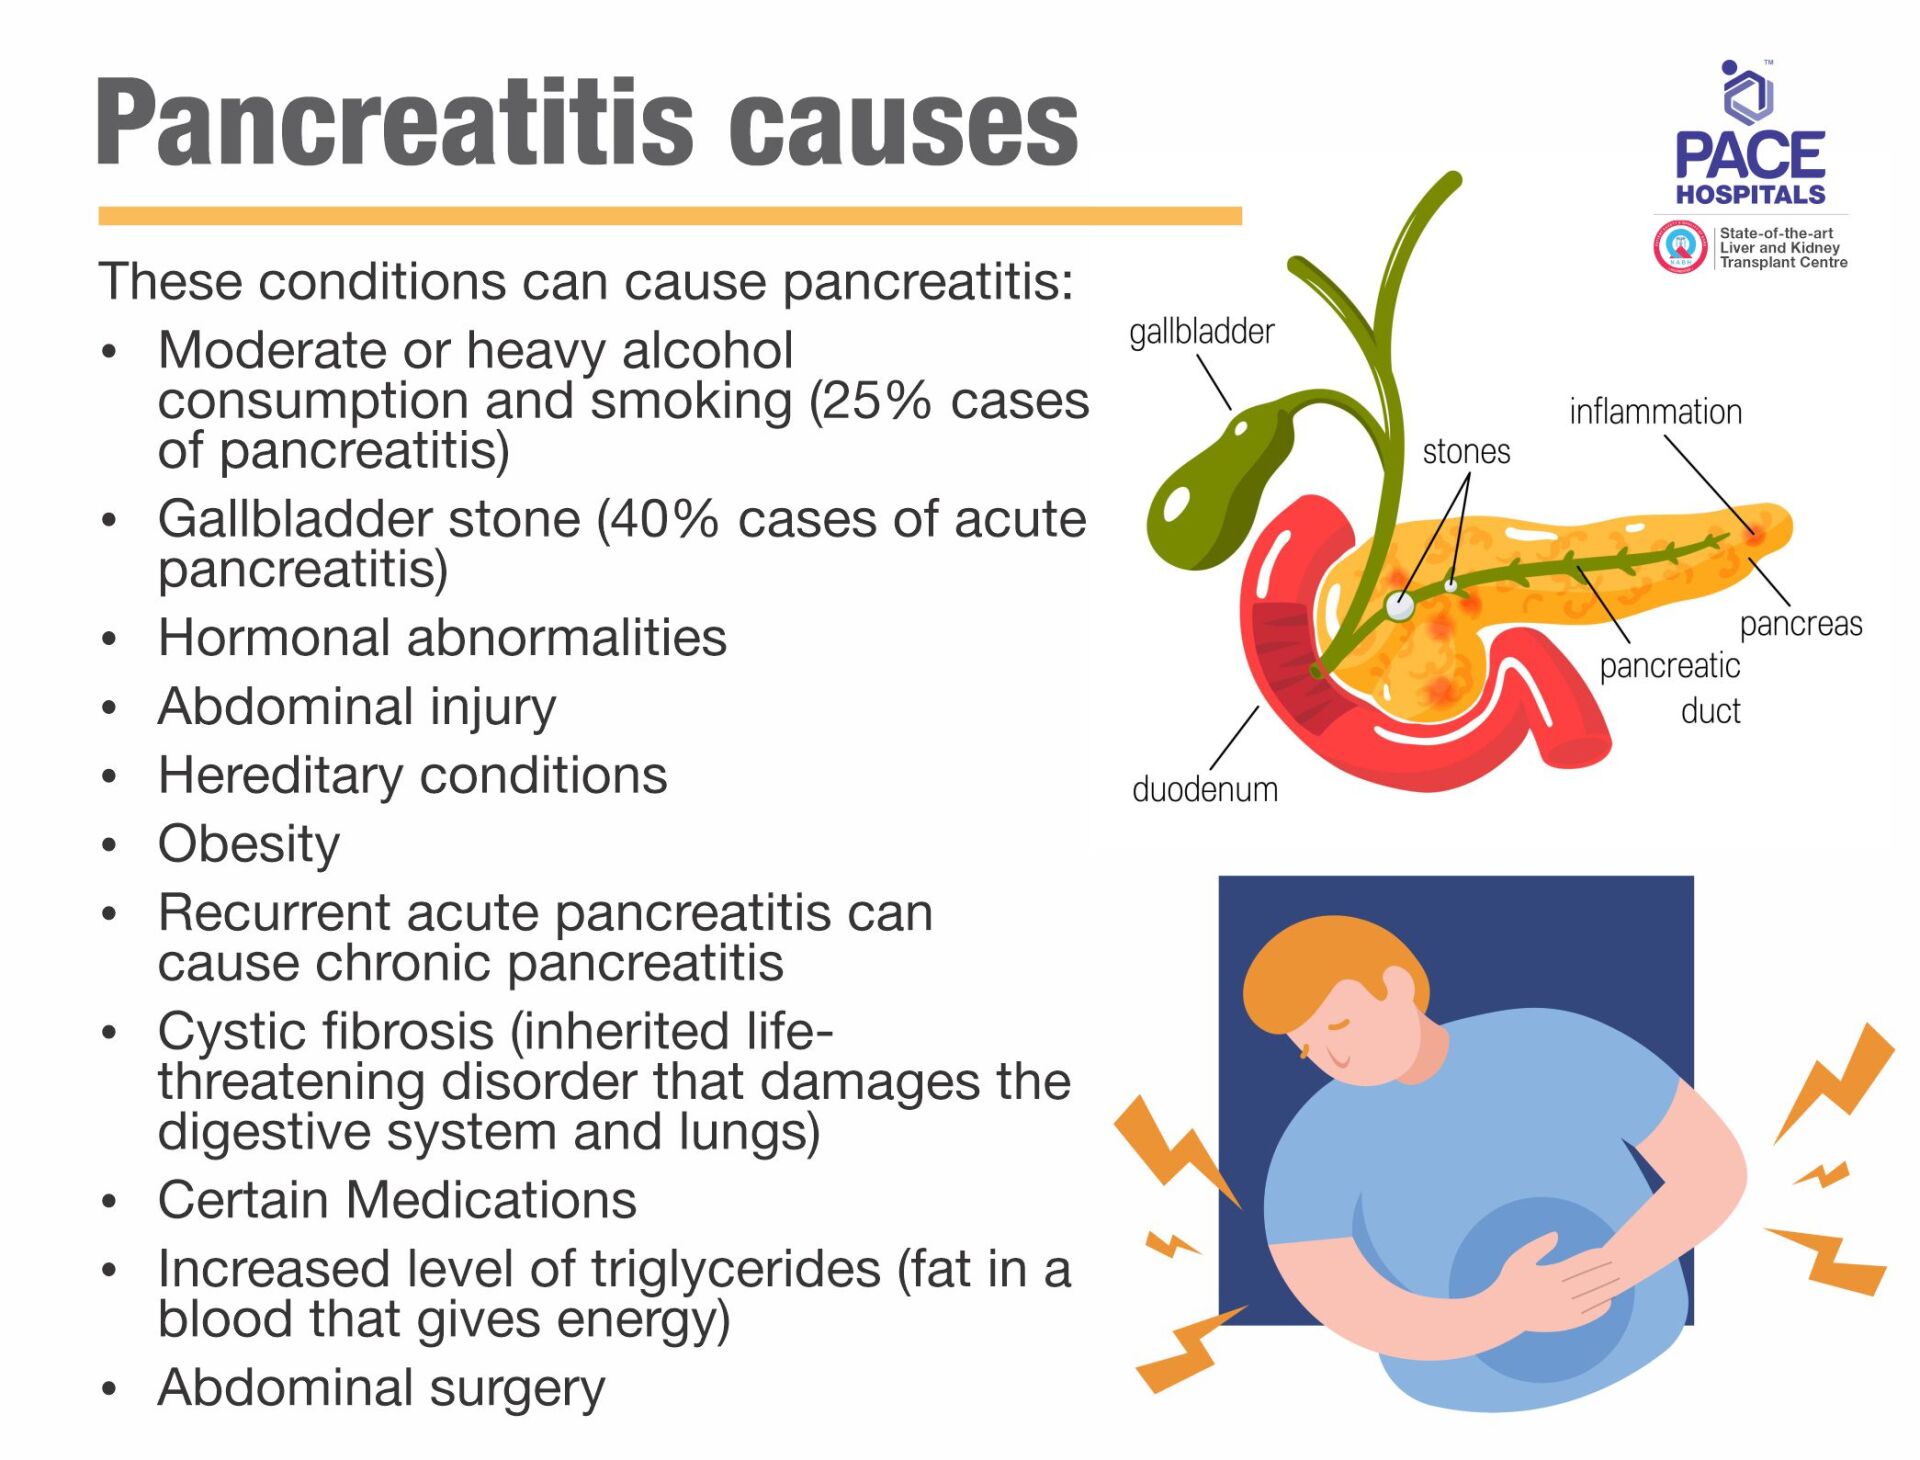 Pancreatitis causes - acute and chronic